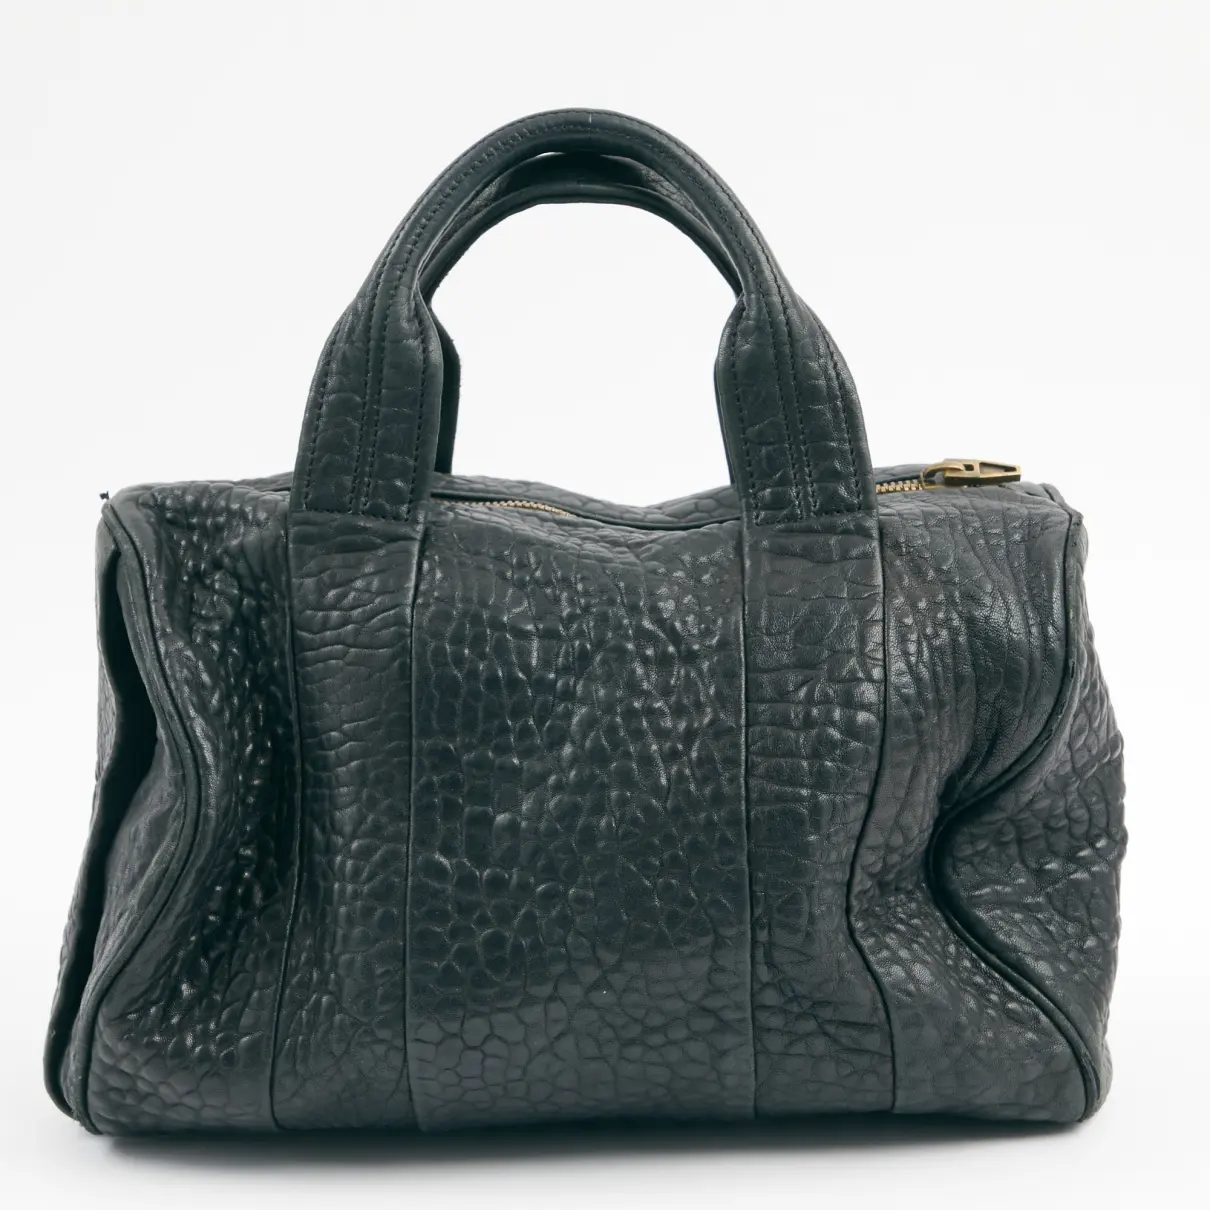 Buy Alexander Wang Rocco leather bag online